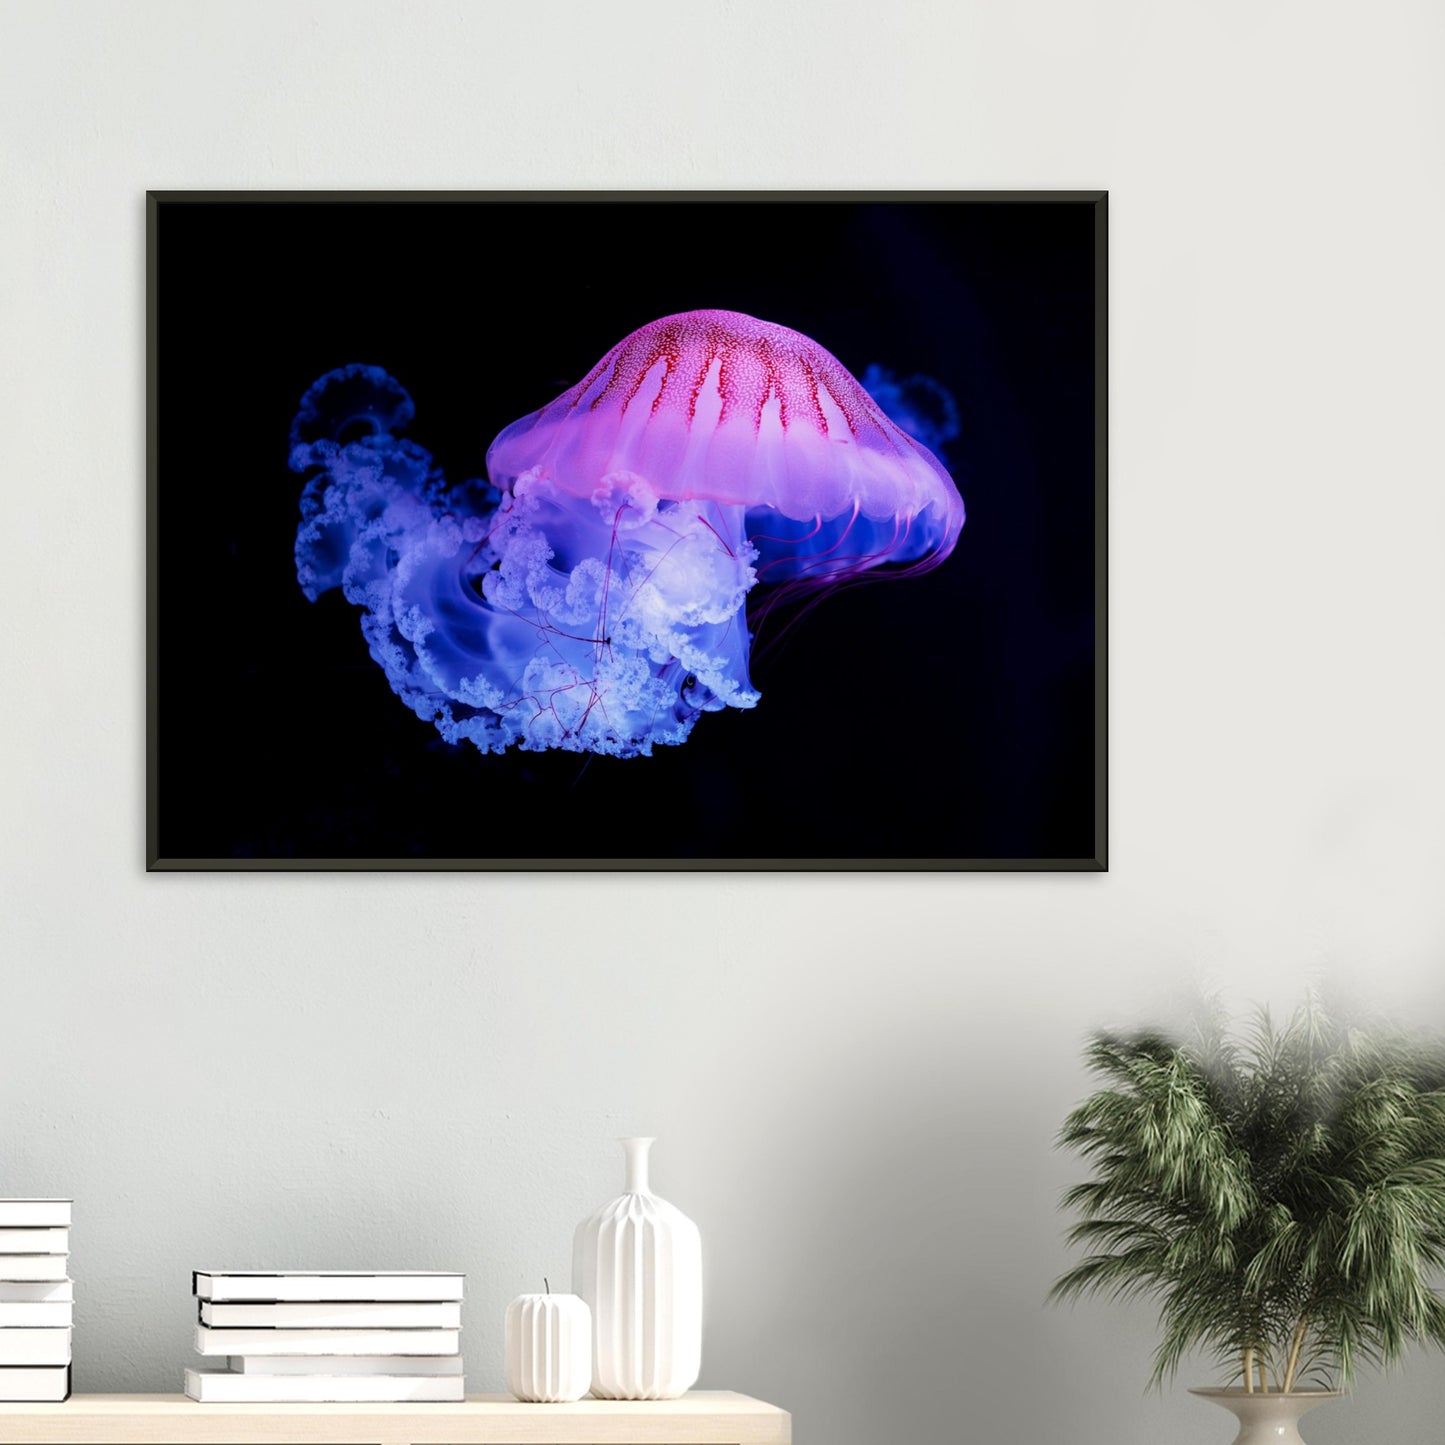 Purple-striped Jellyfish (Chrysaora colorata)